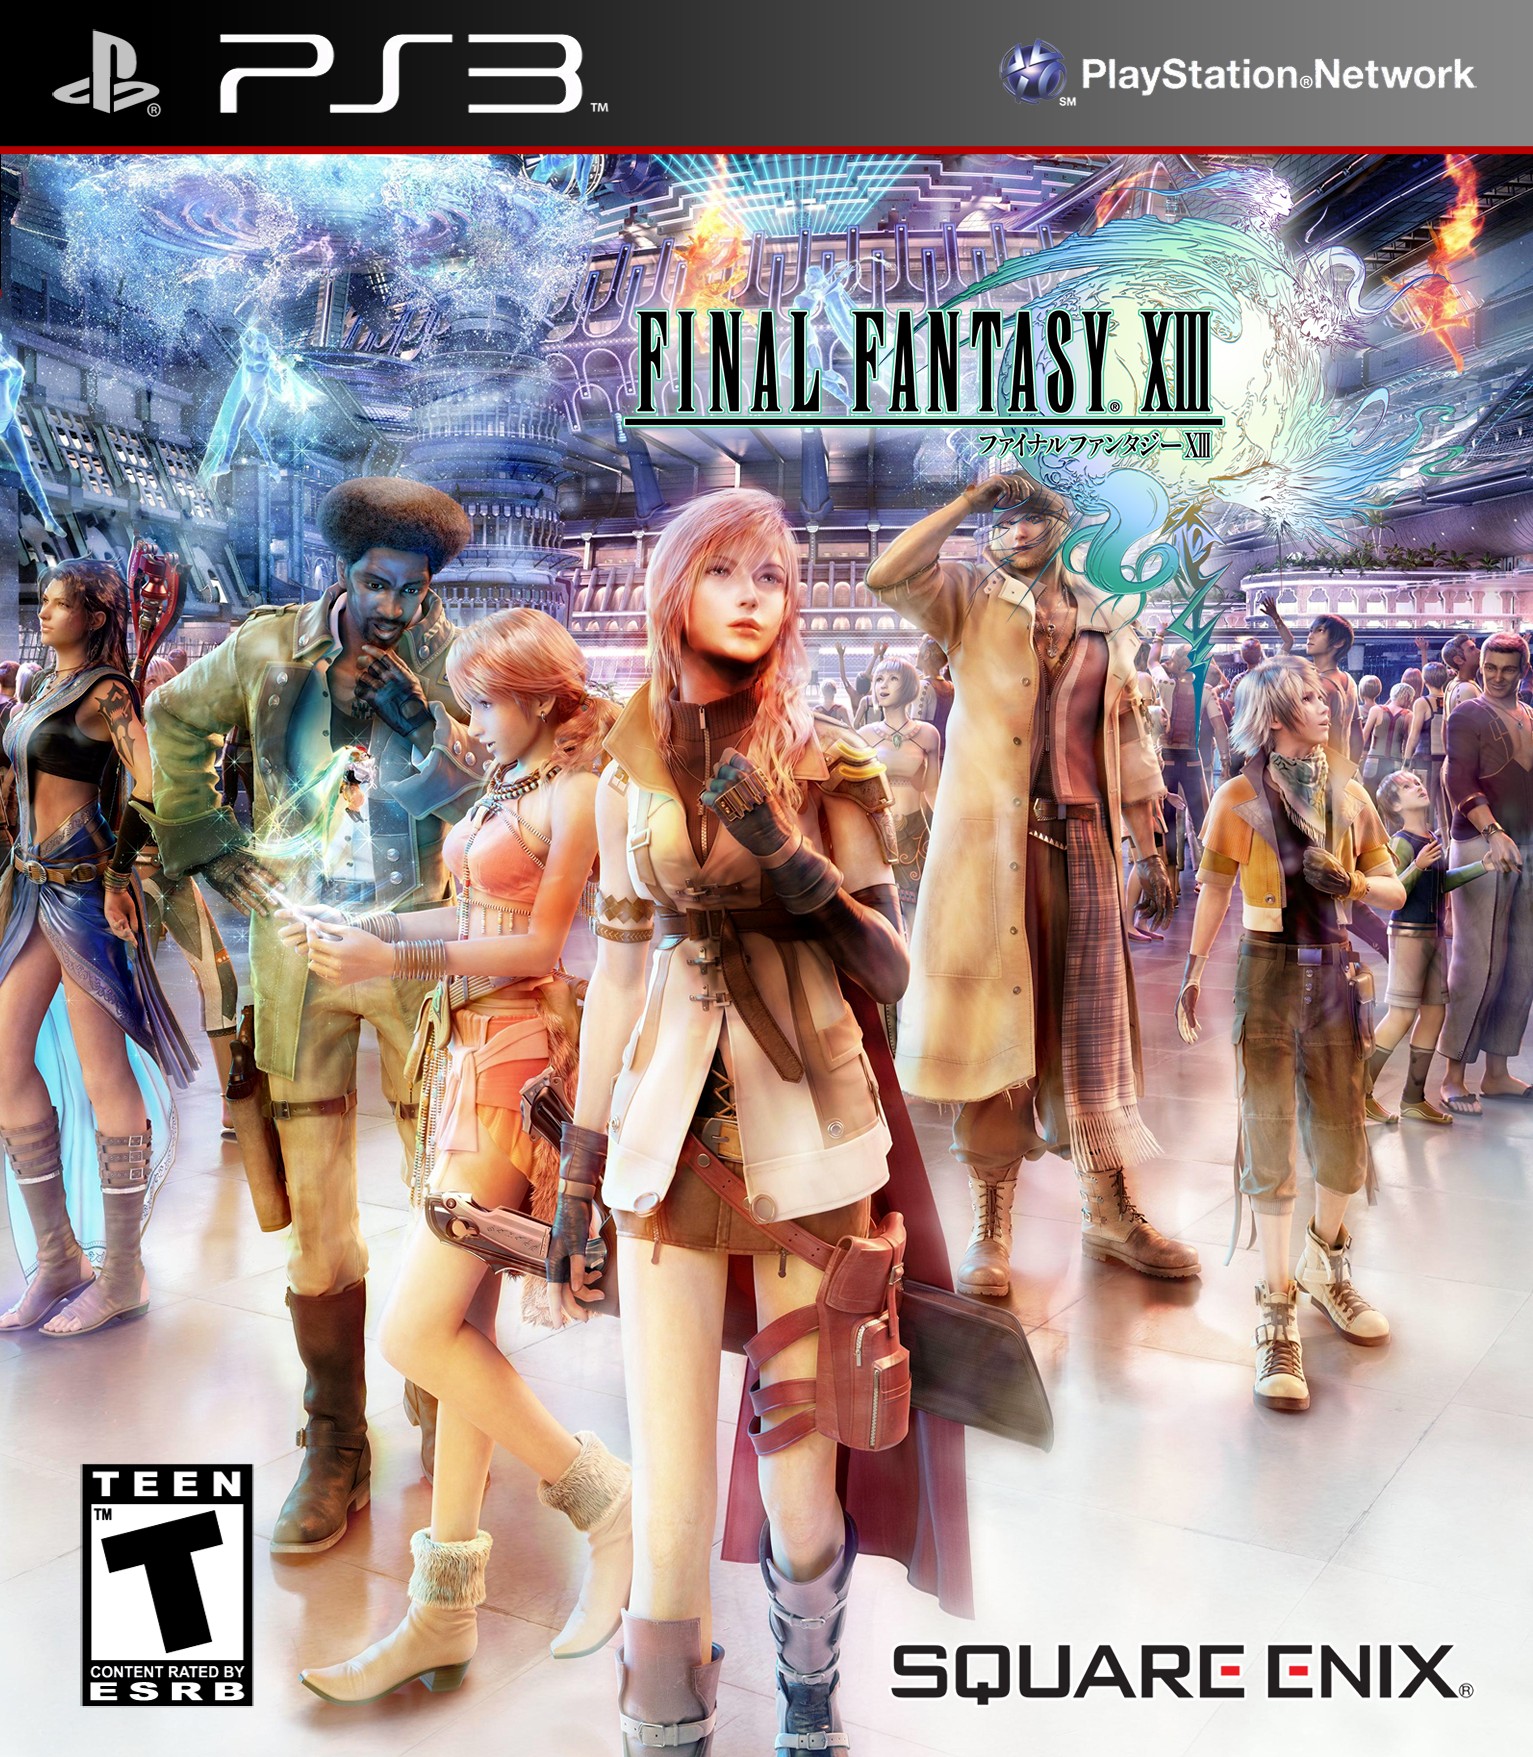 'Final Fantasy: XIII (Square Enix)'